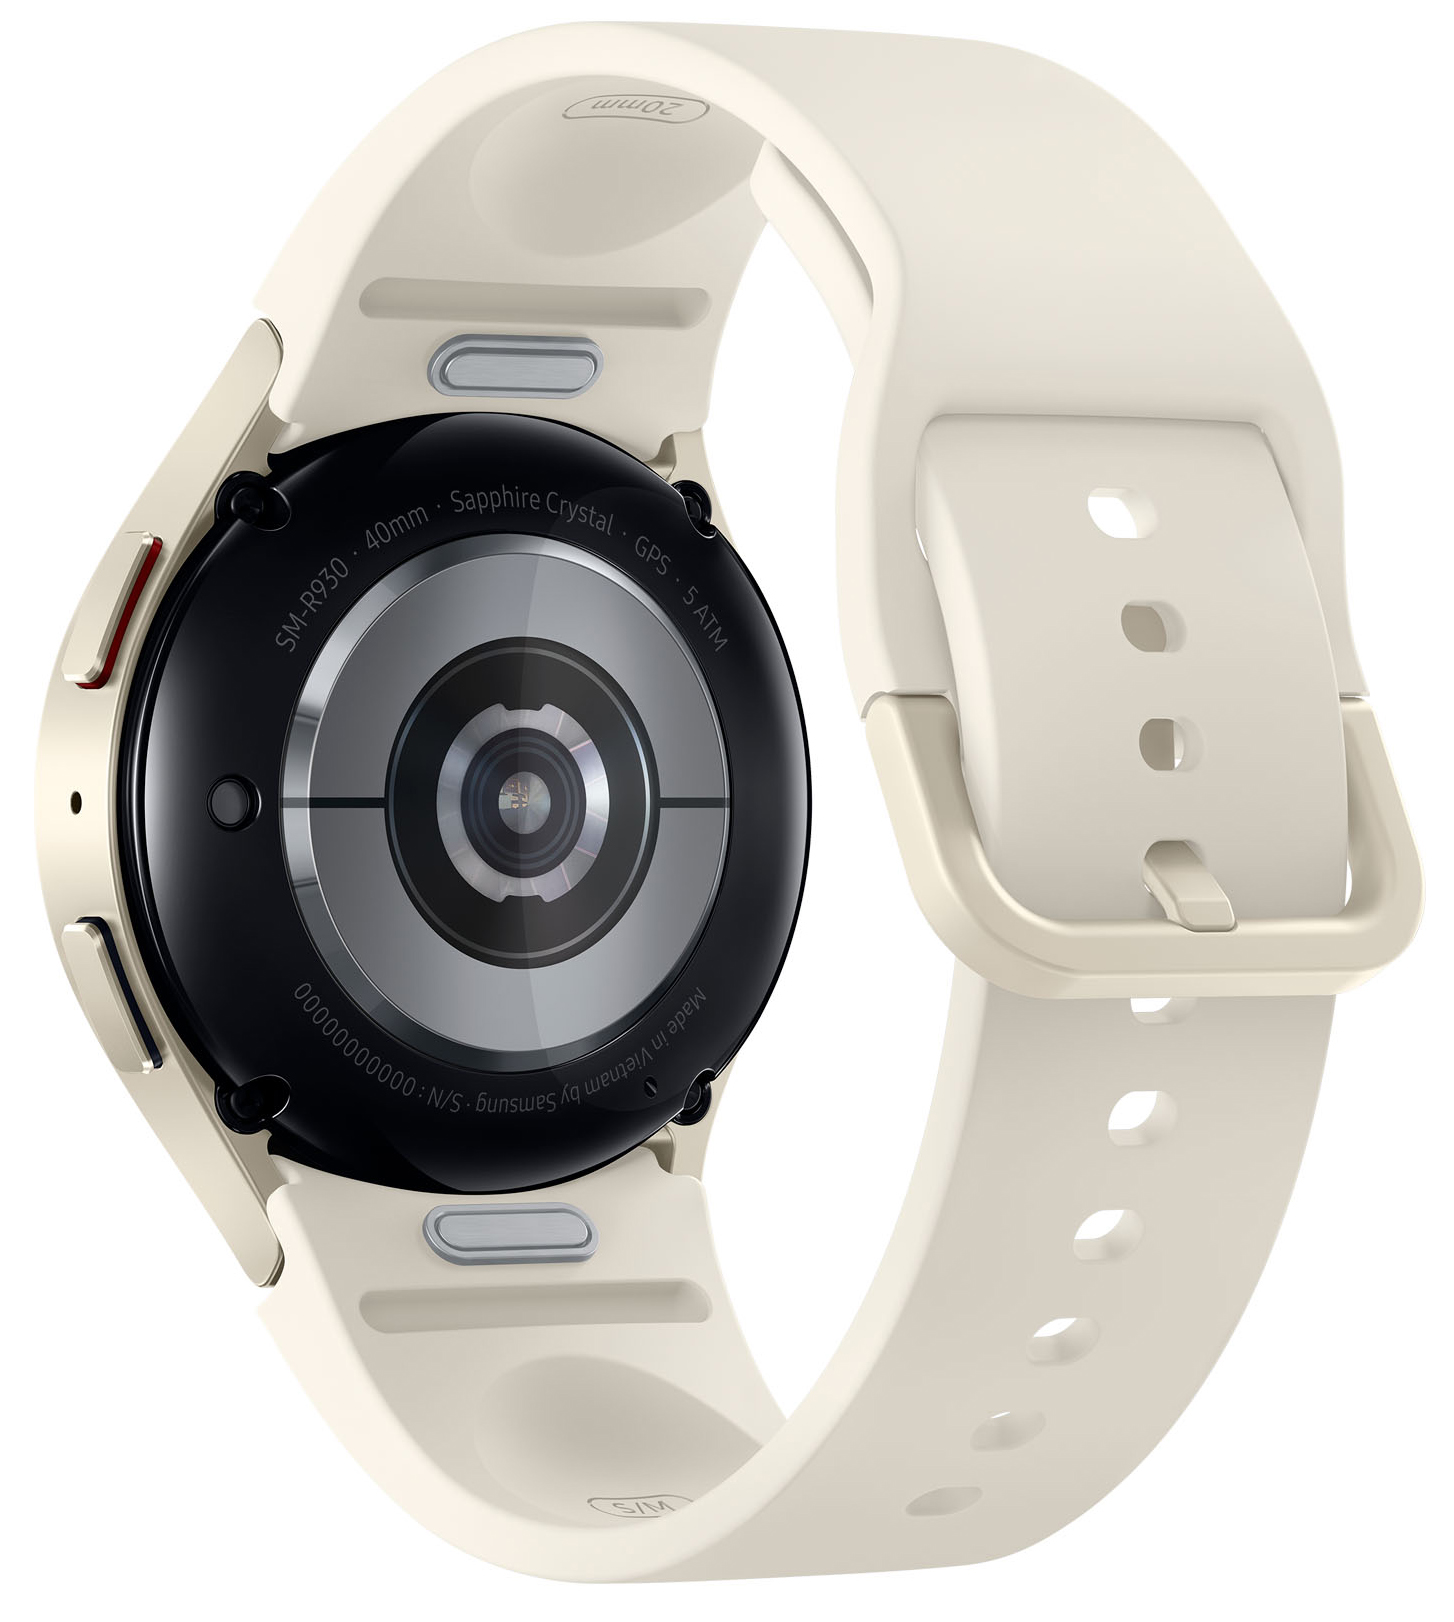 Relógio Inteligente Smartwatch Samsung Watch Active 2 BT com GPS